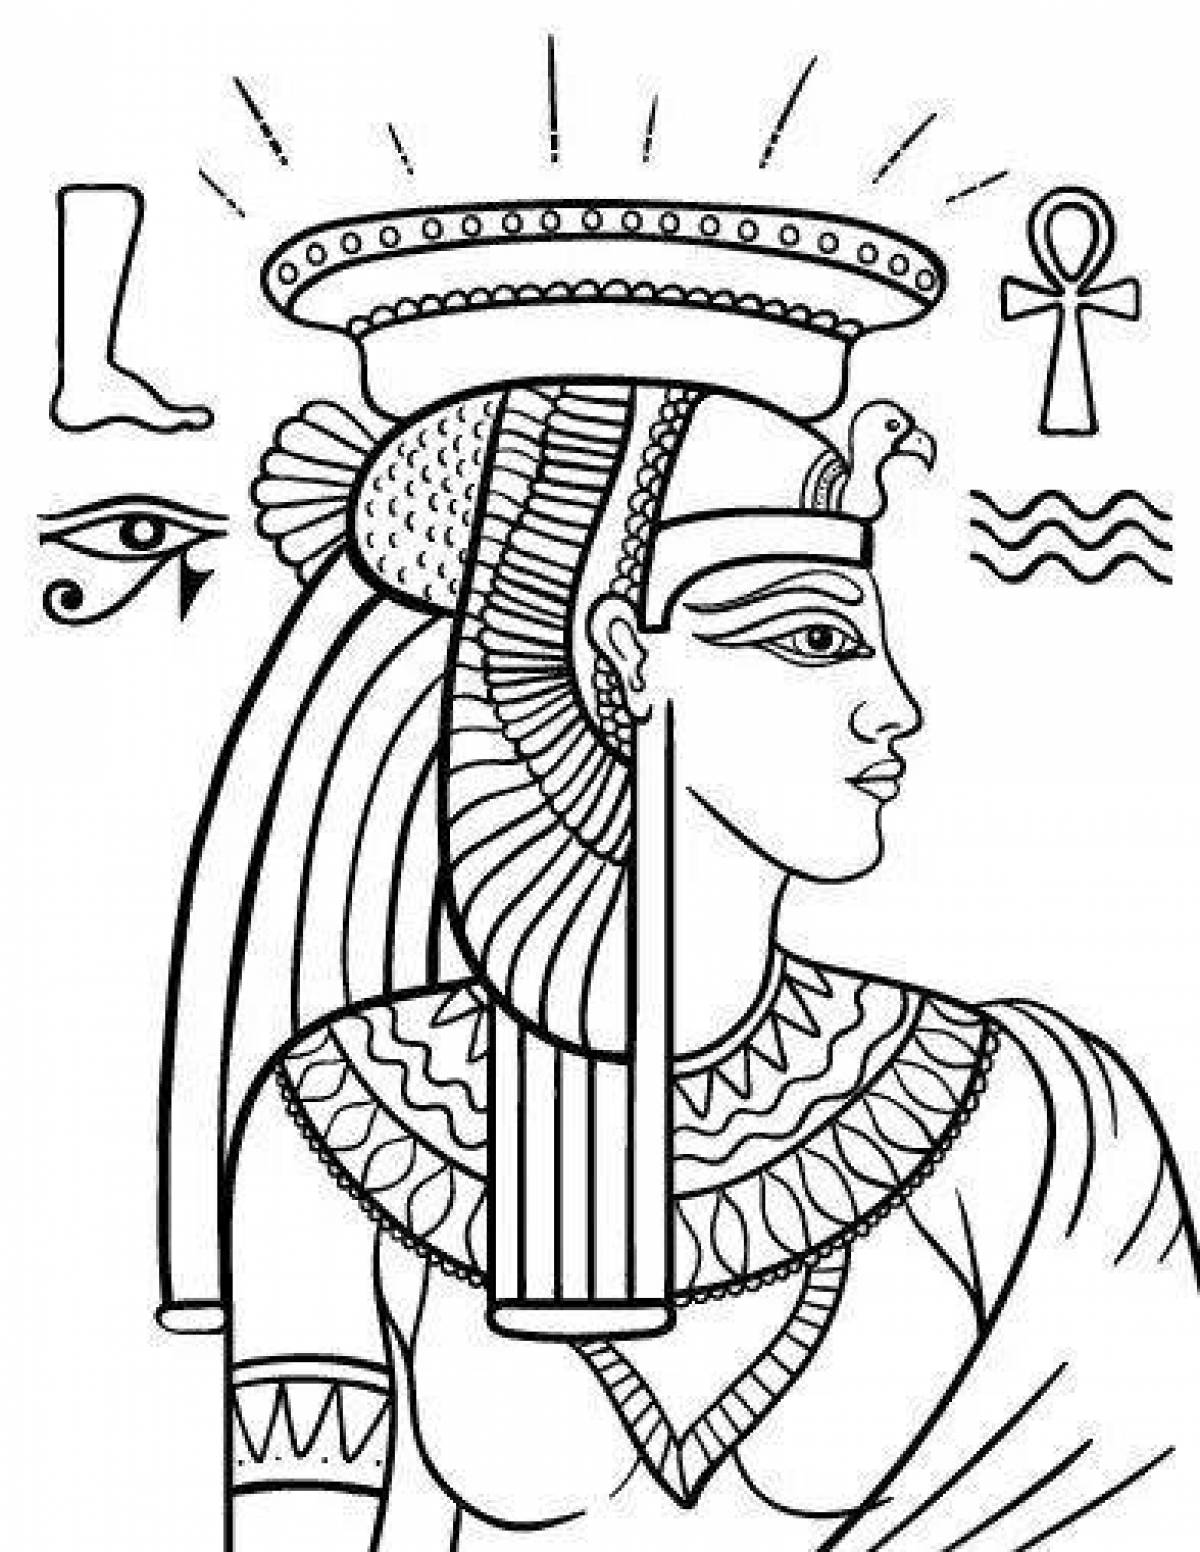 Cleopatra glitter coloring book